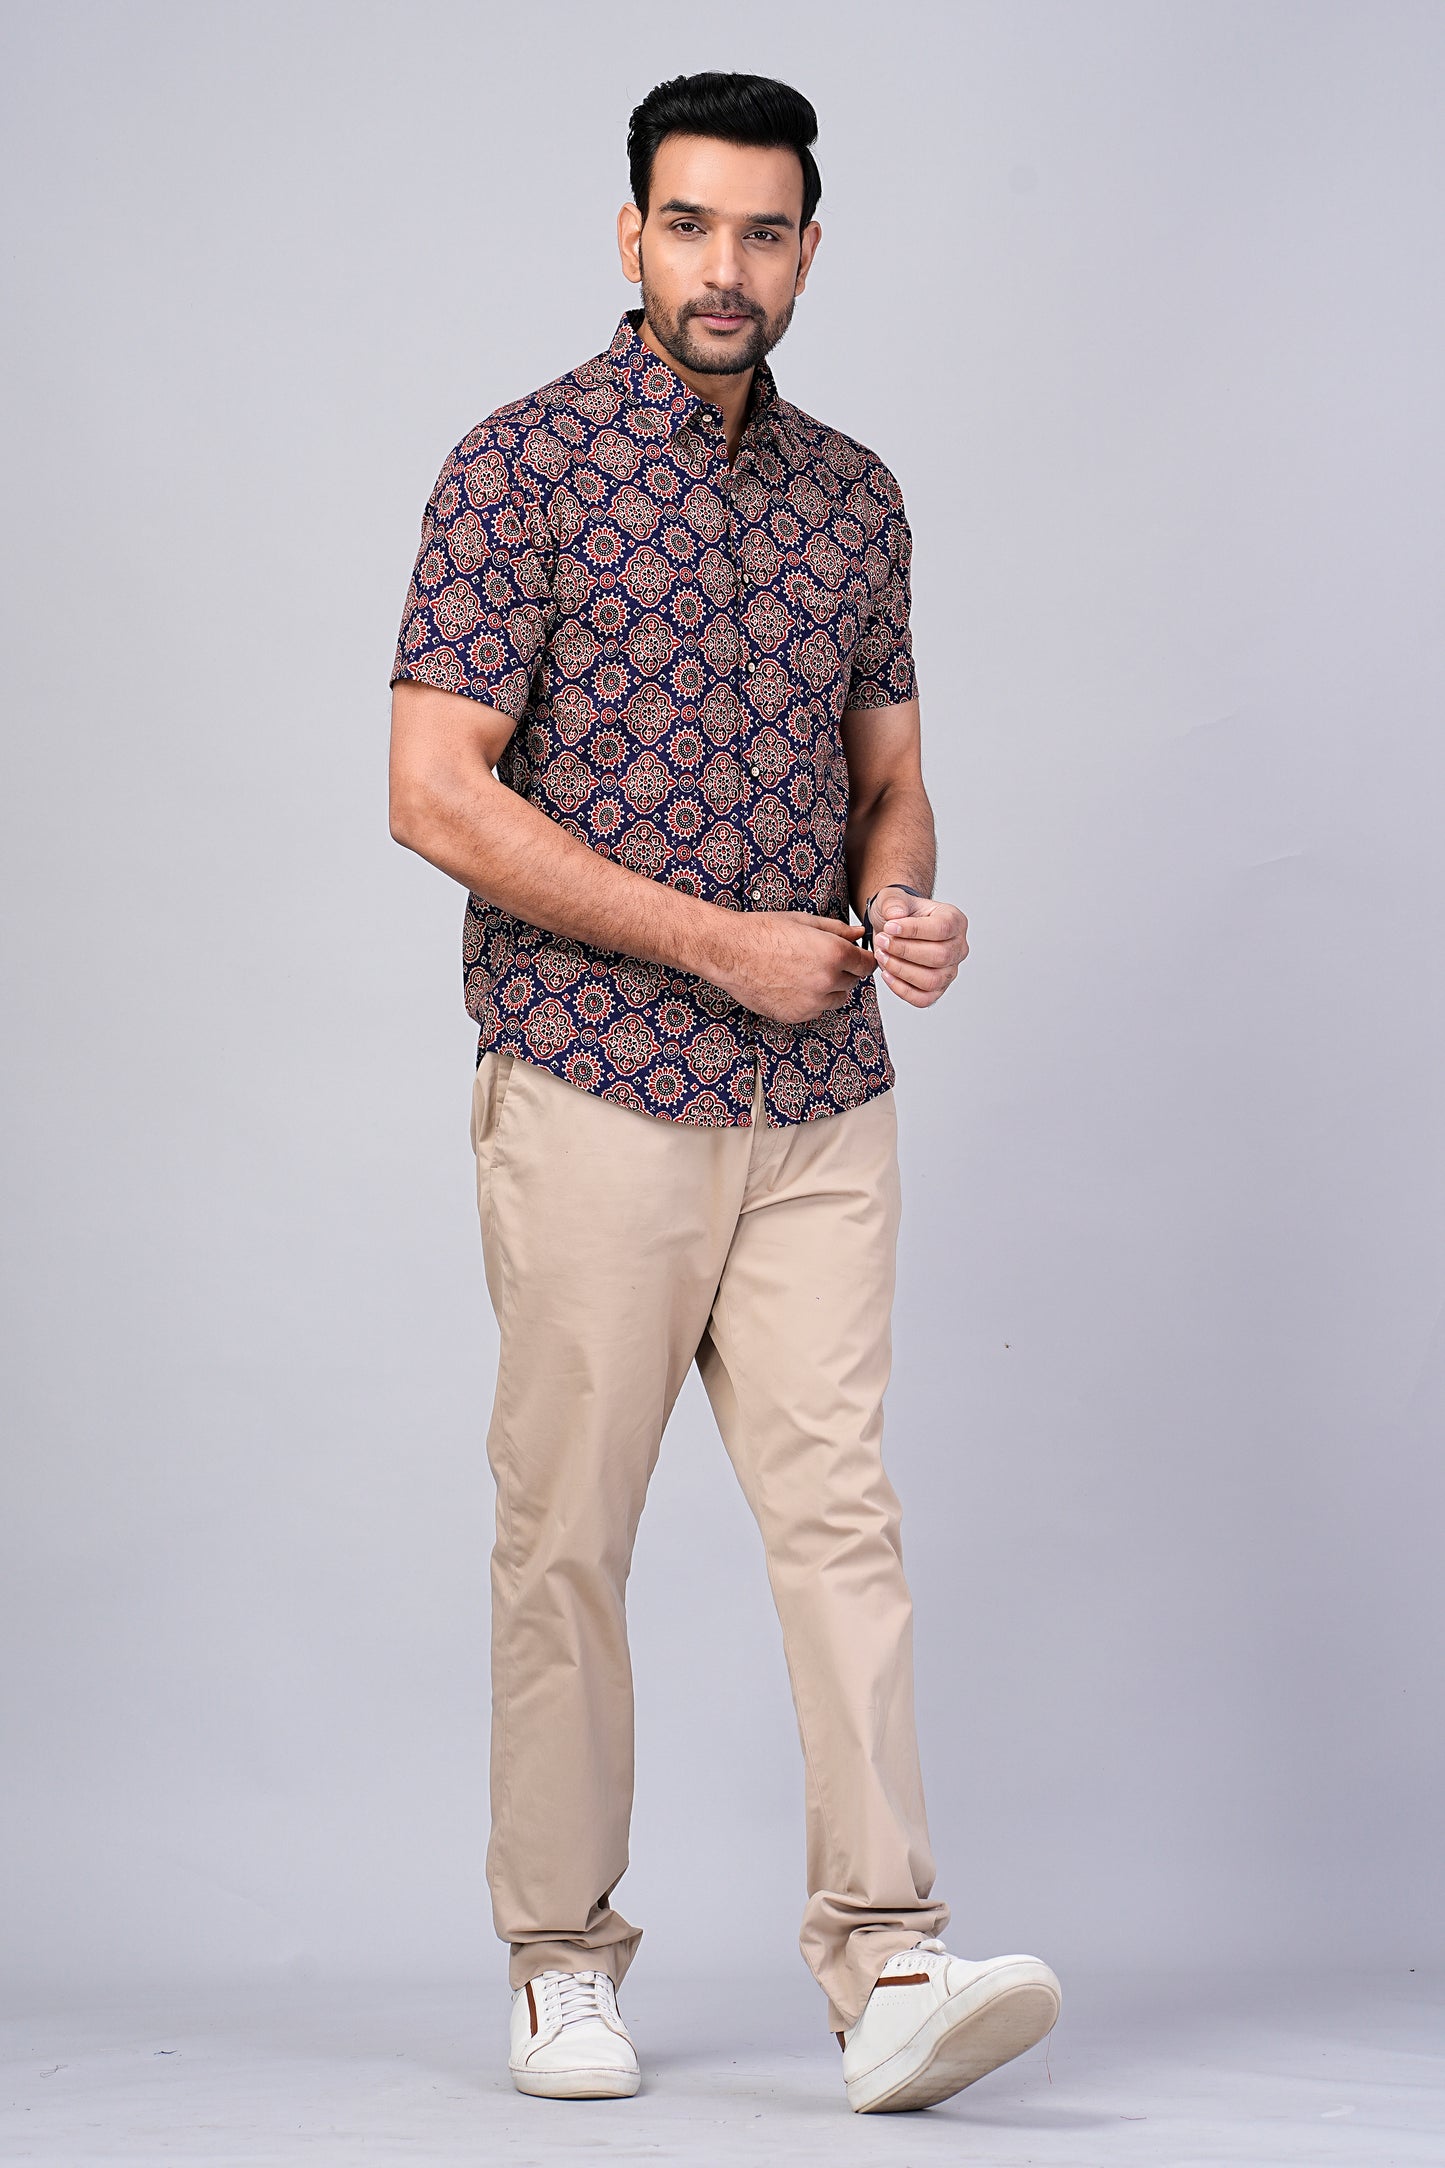 Men's Ethnic Ajrakh Printed Half-Sleeves shirts